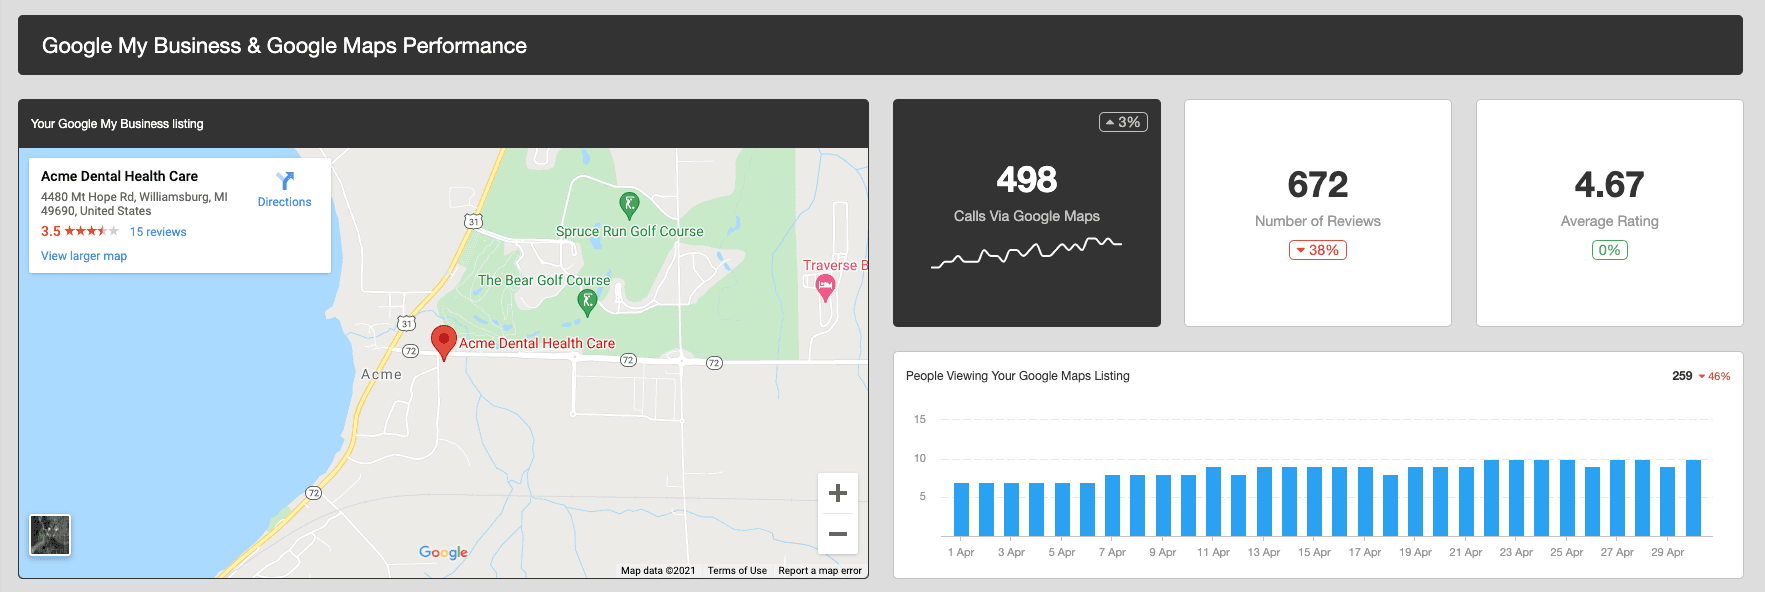 Embed Google Maps alongside Google My Business performance data